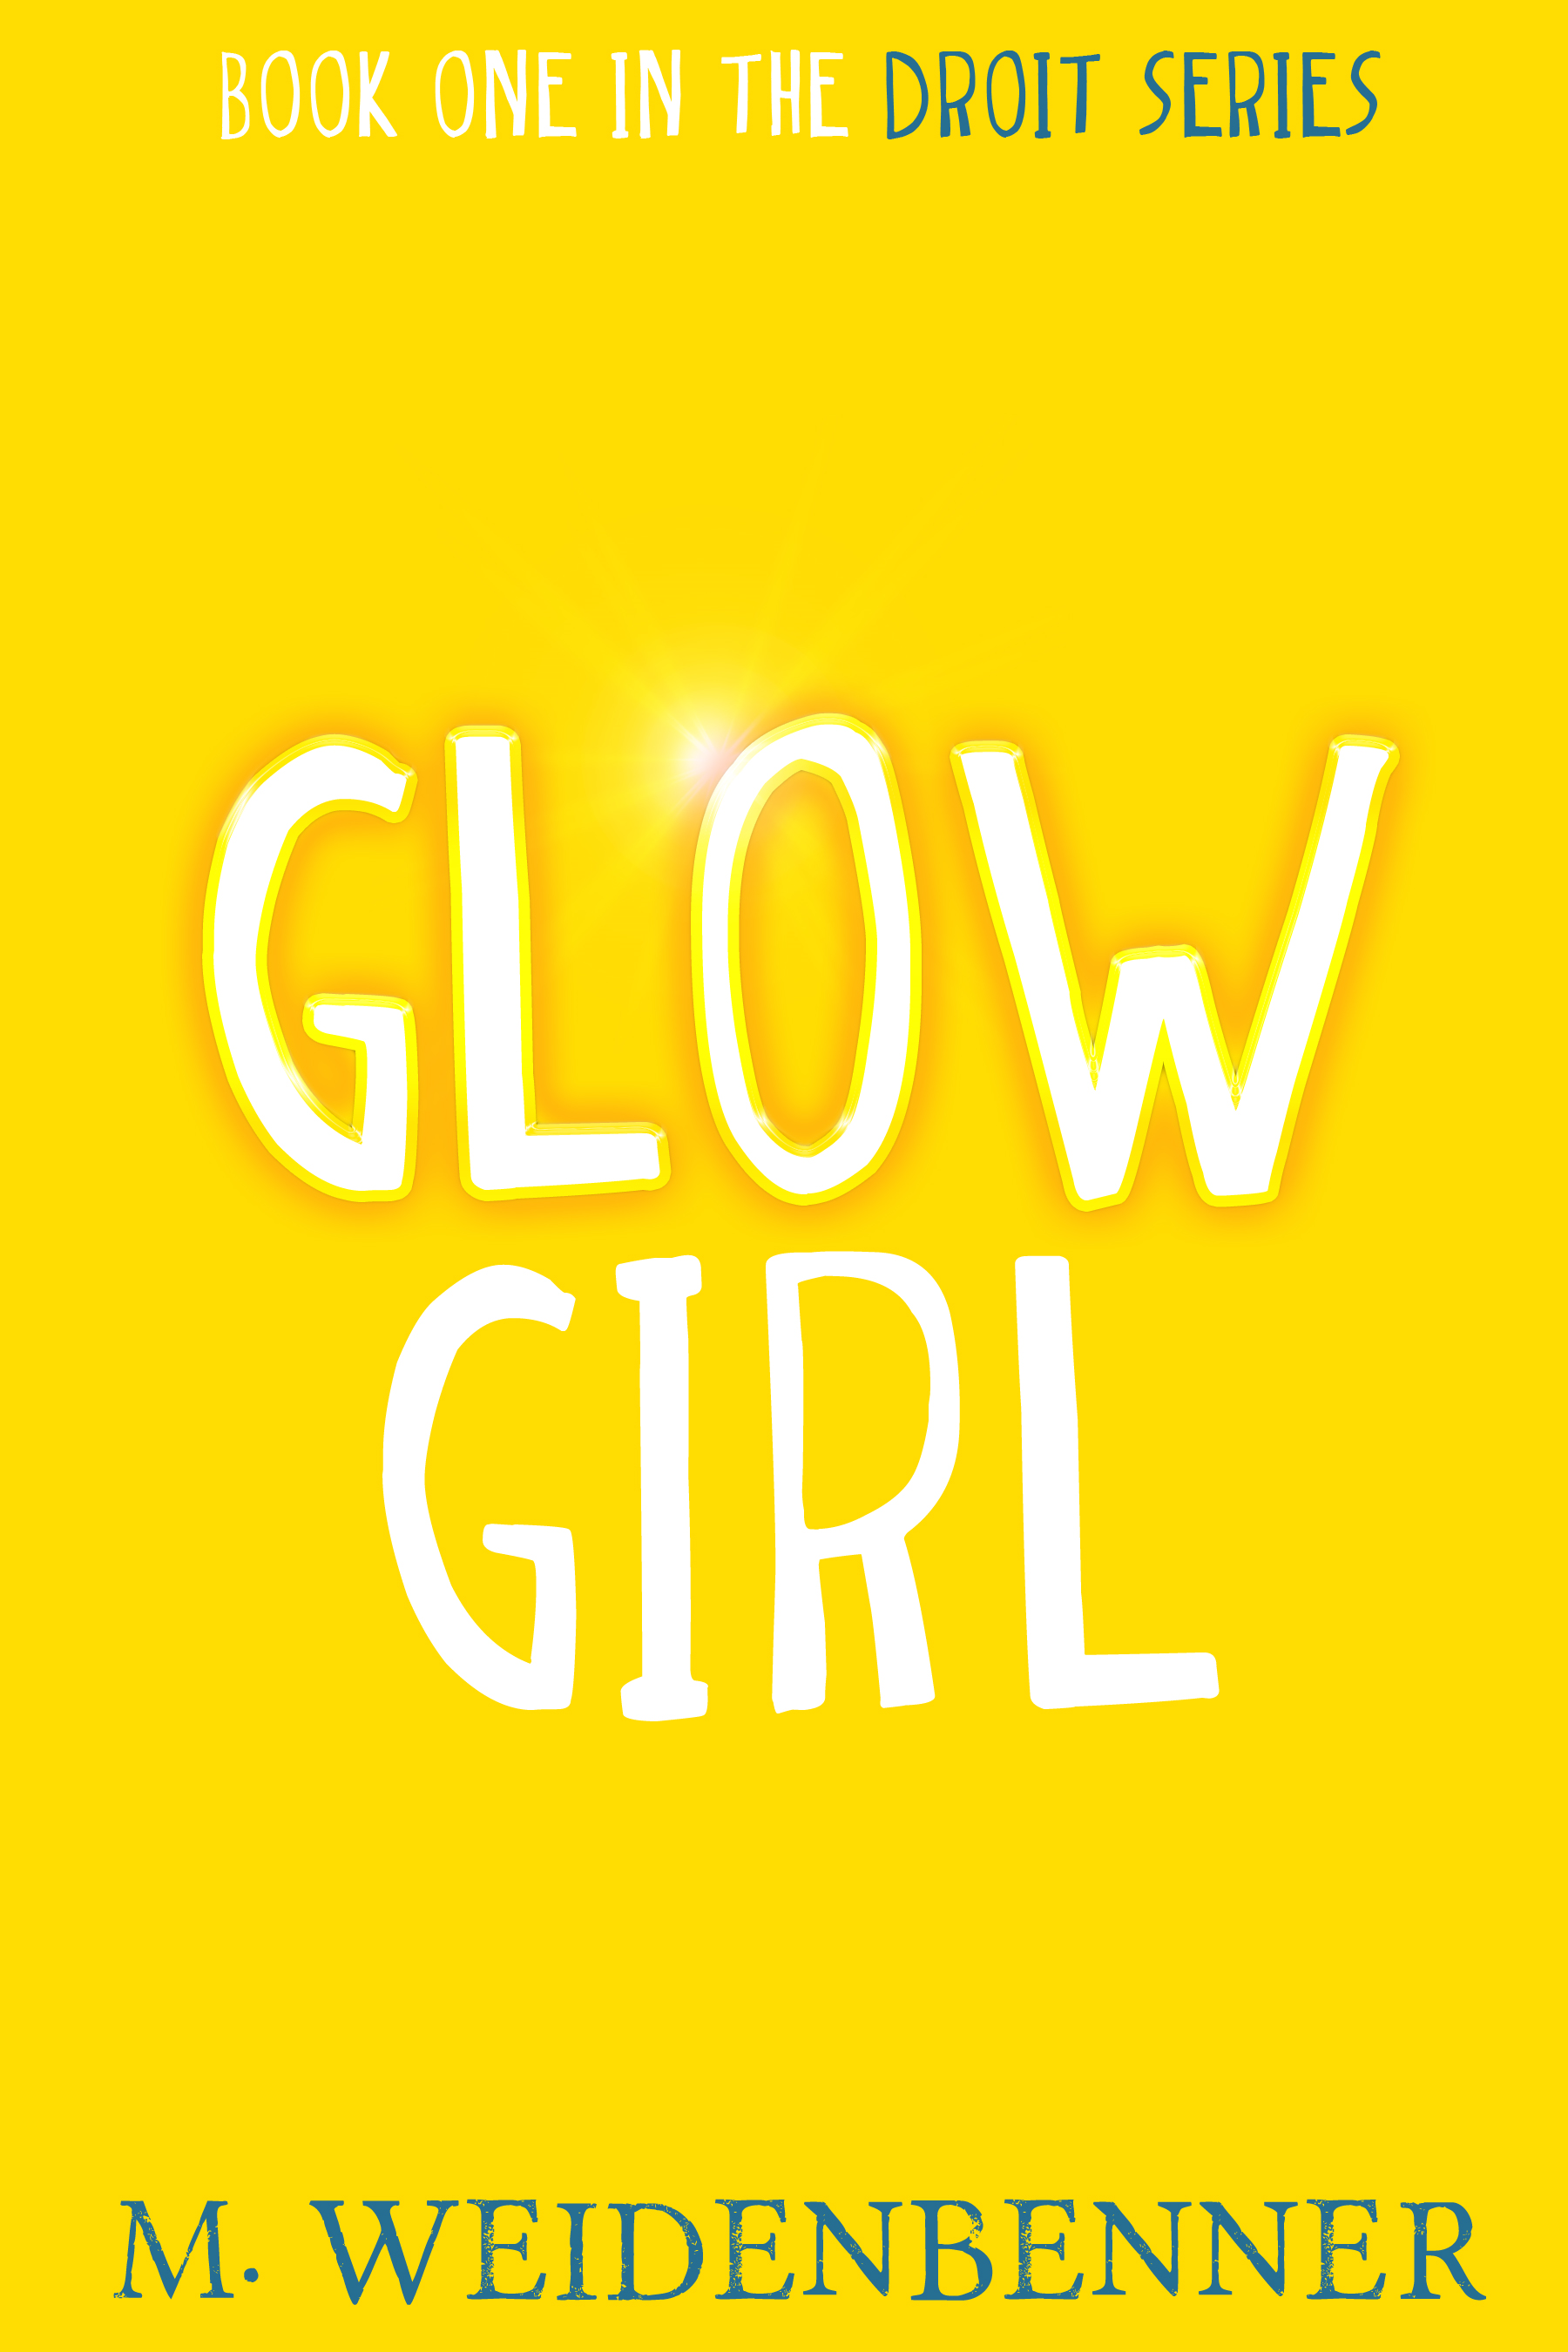 Glow Girl